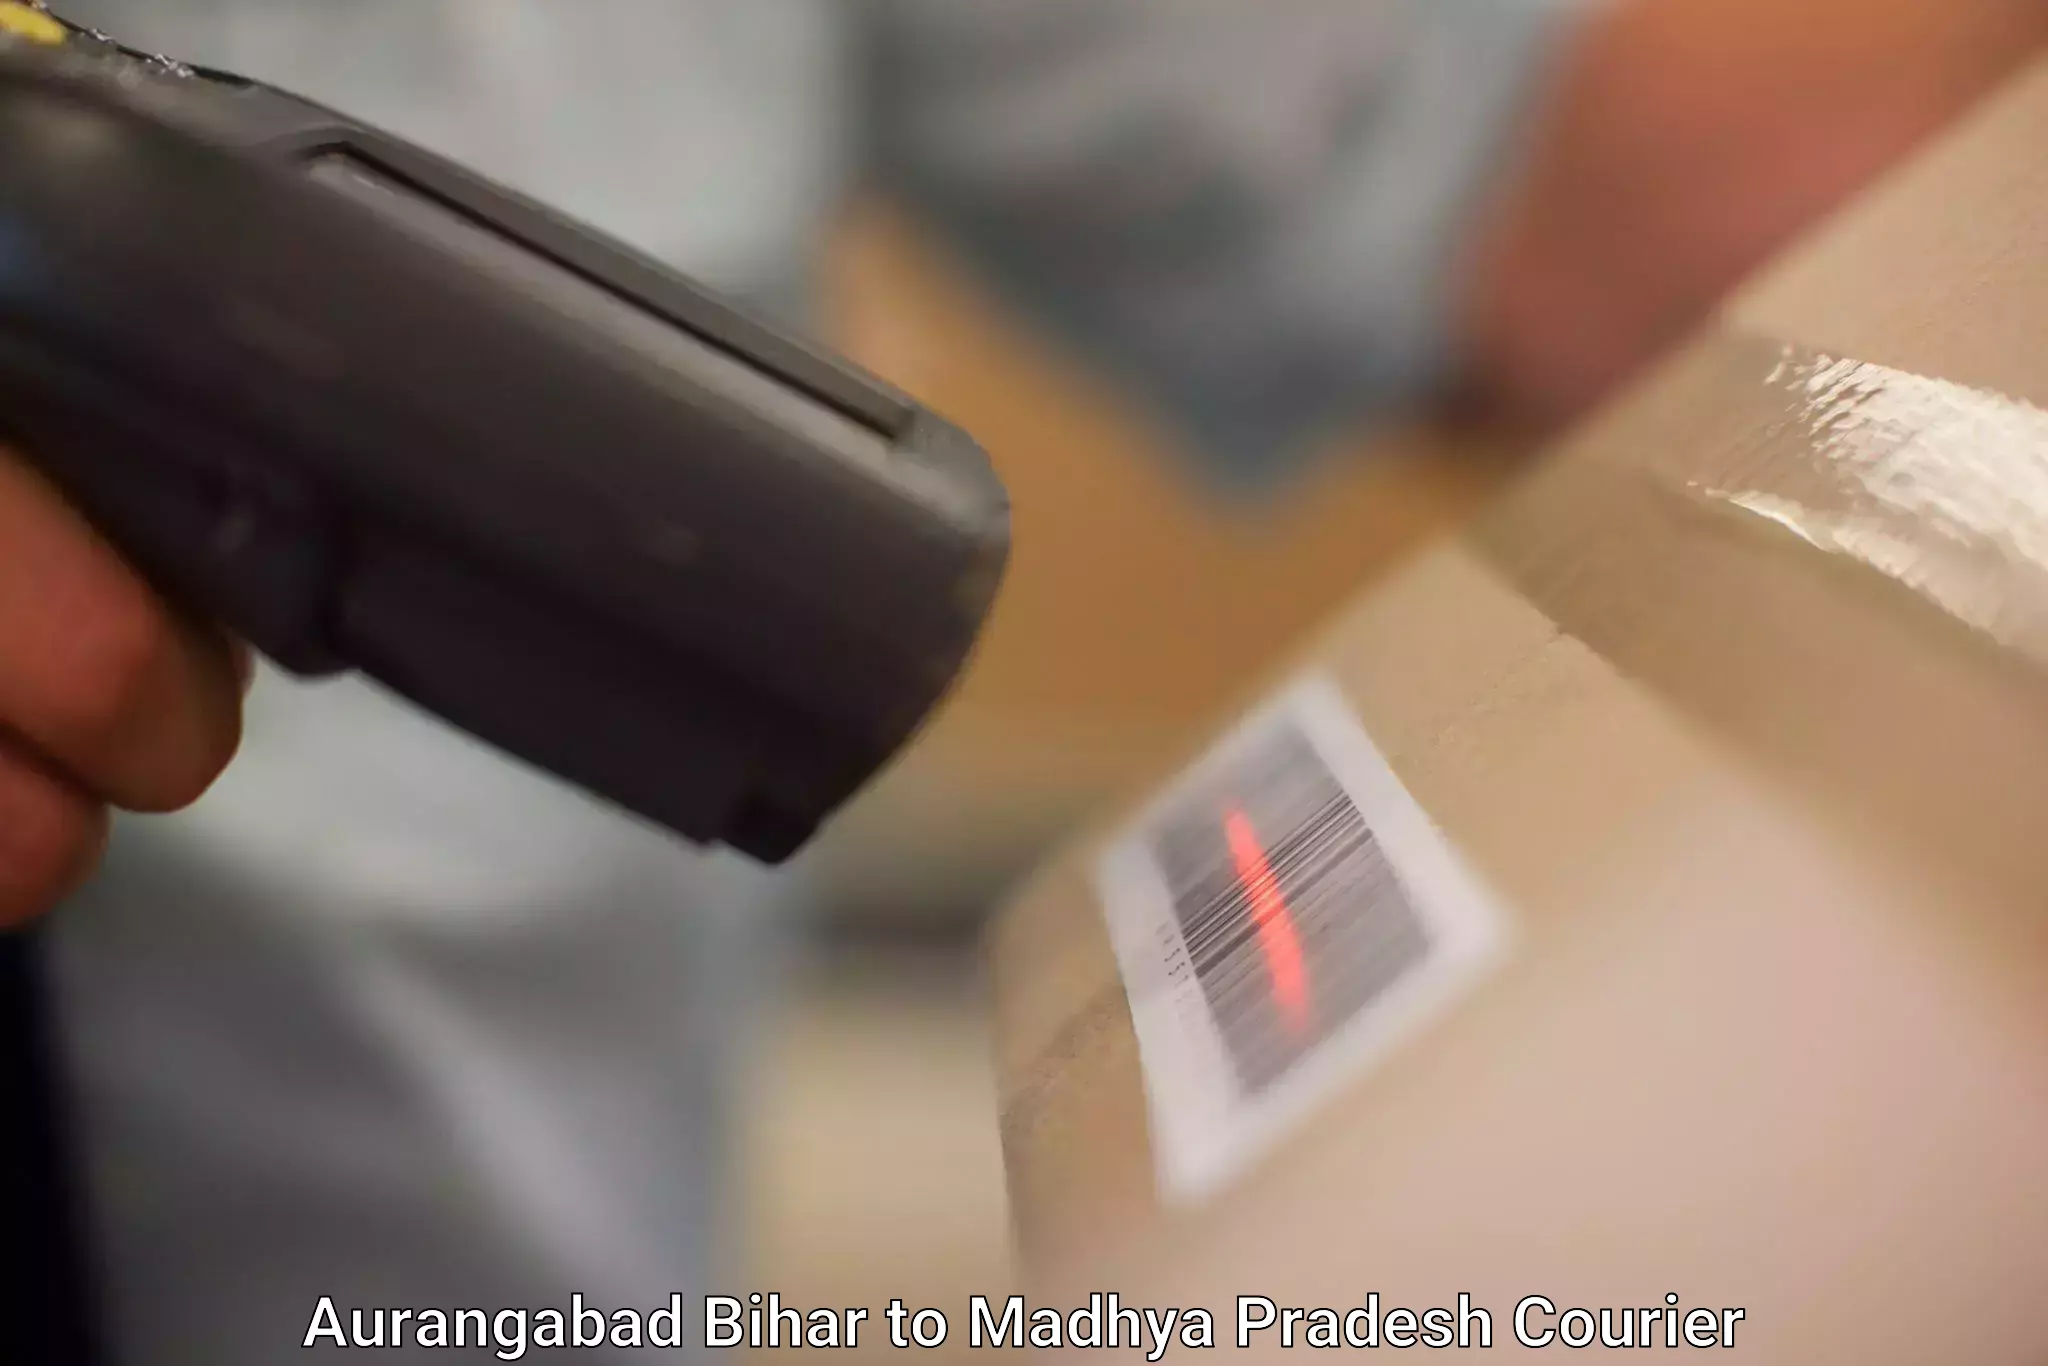 Tech-enabled shipping Aurangabad Bihar to Lashkar